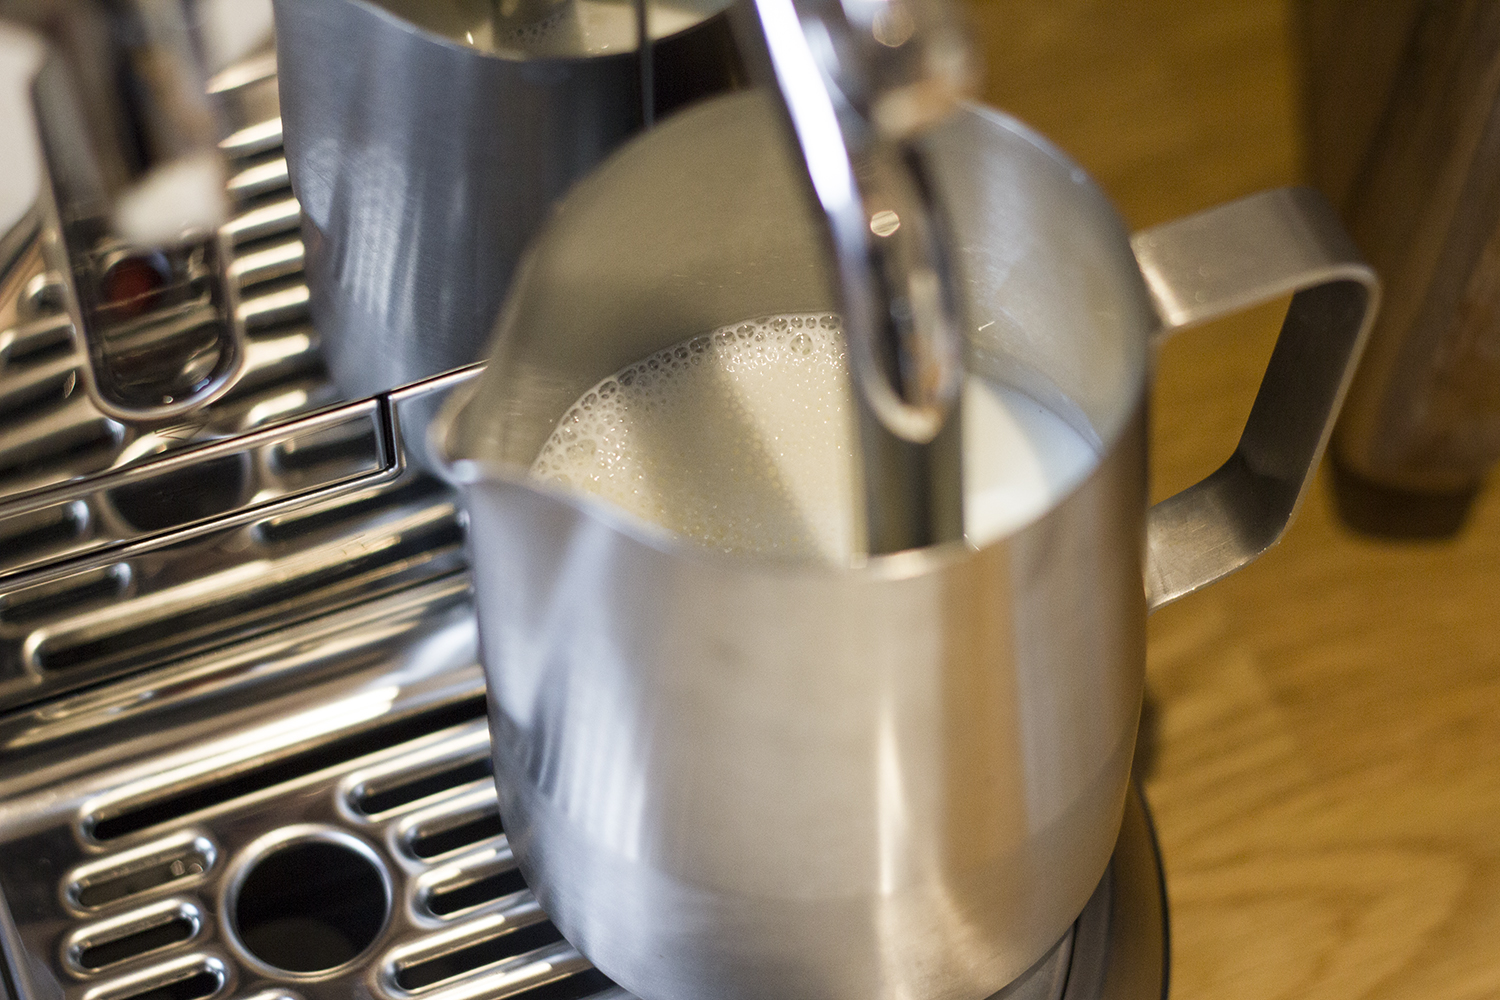 Steaming the Milk - Nespresso Creatista Plus